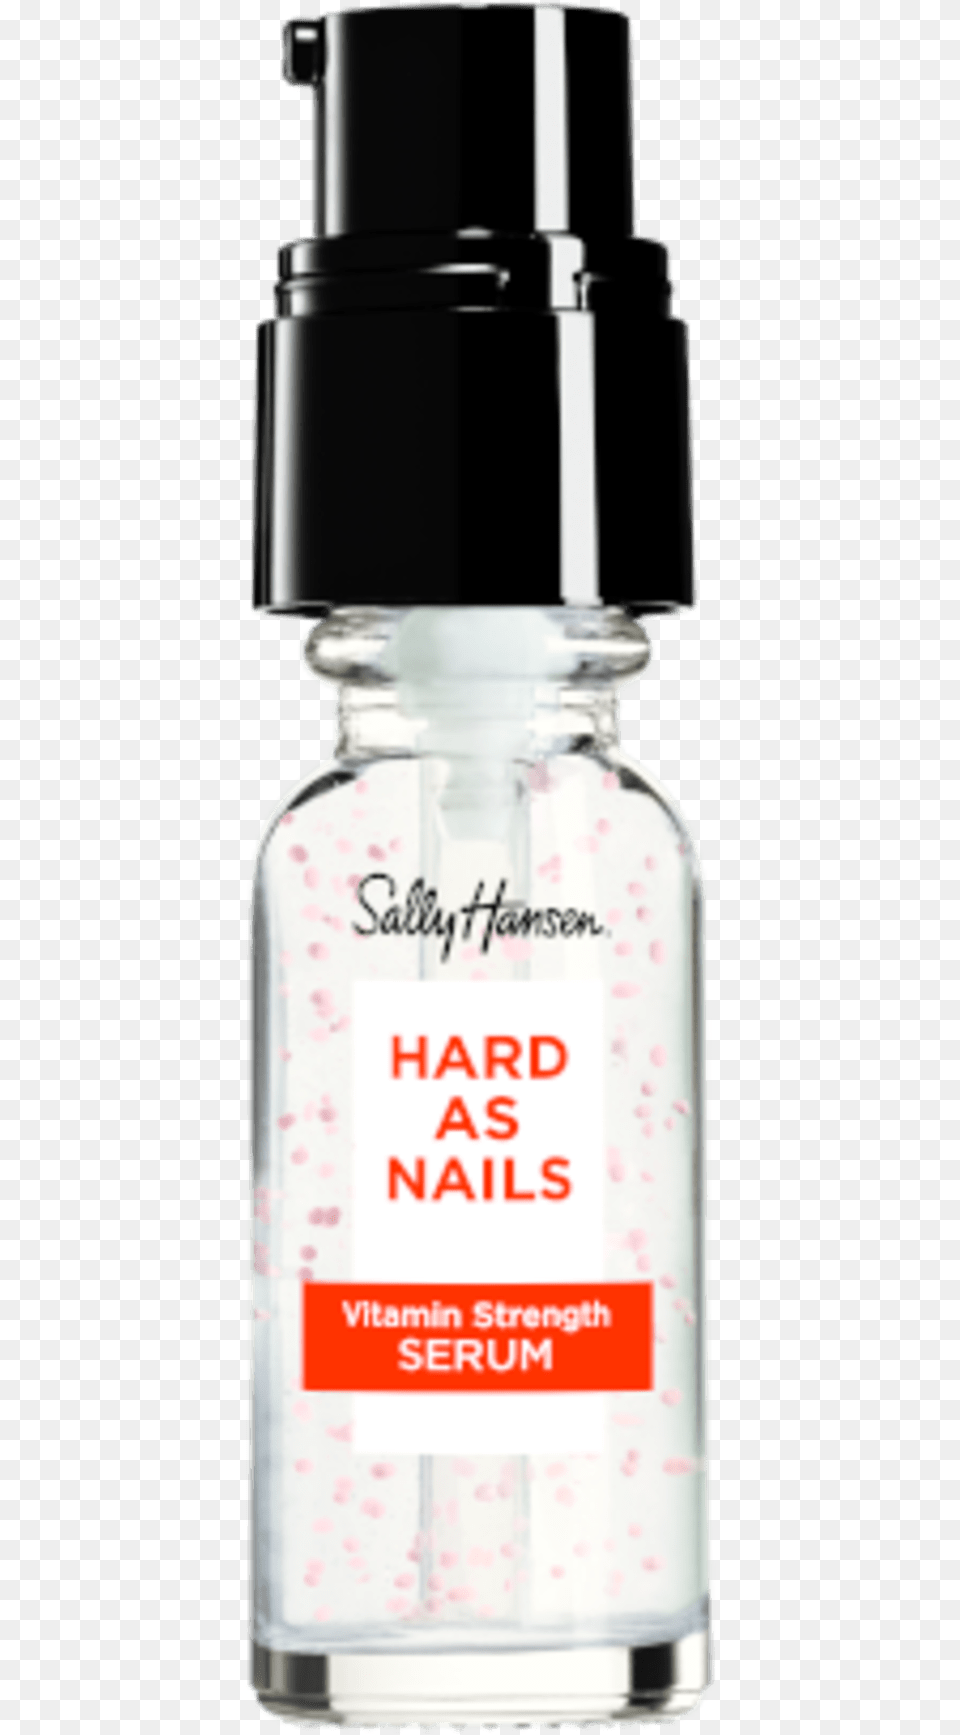 Sally Hansen Hard As Nails Vitamin Strength Serum, Bottle, Cosmetics, Perfume Png